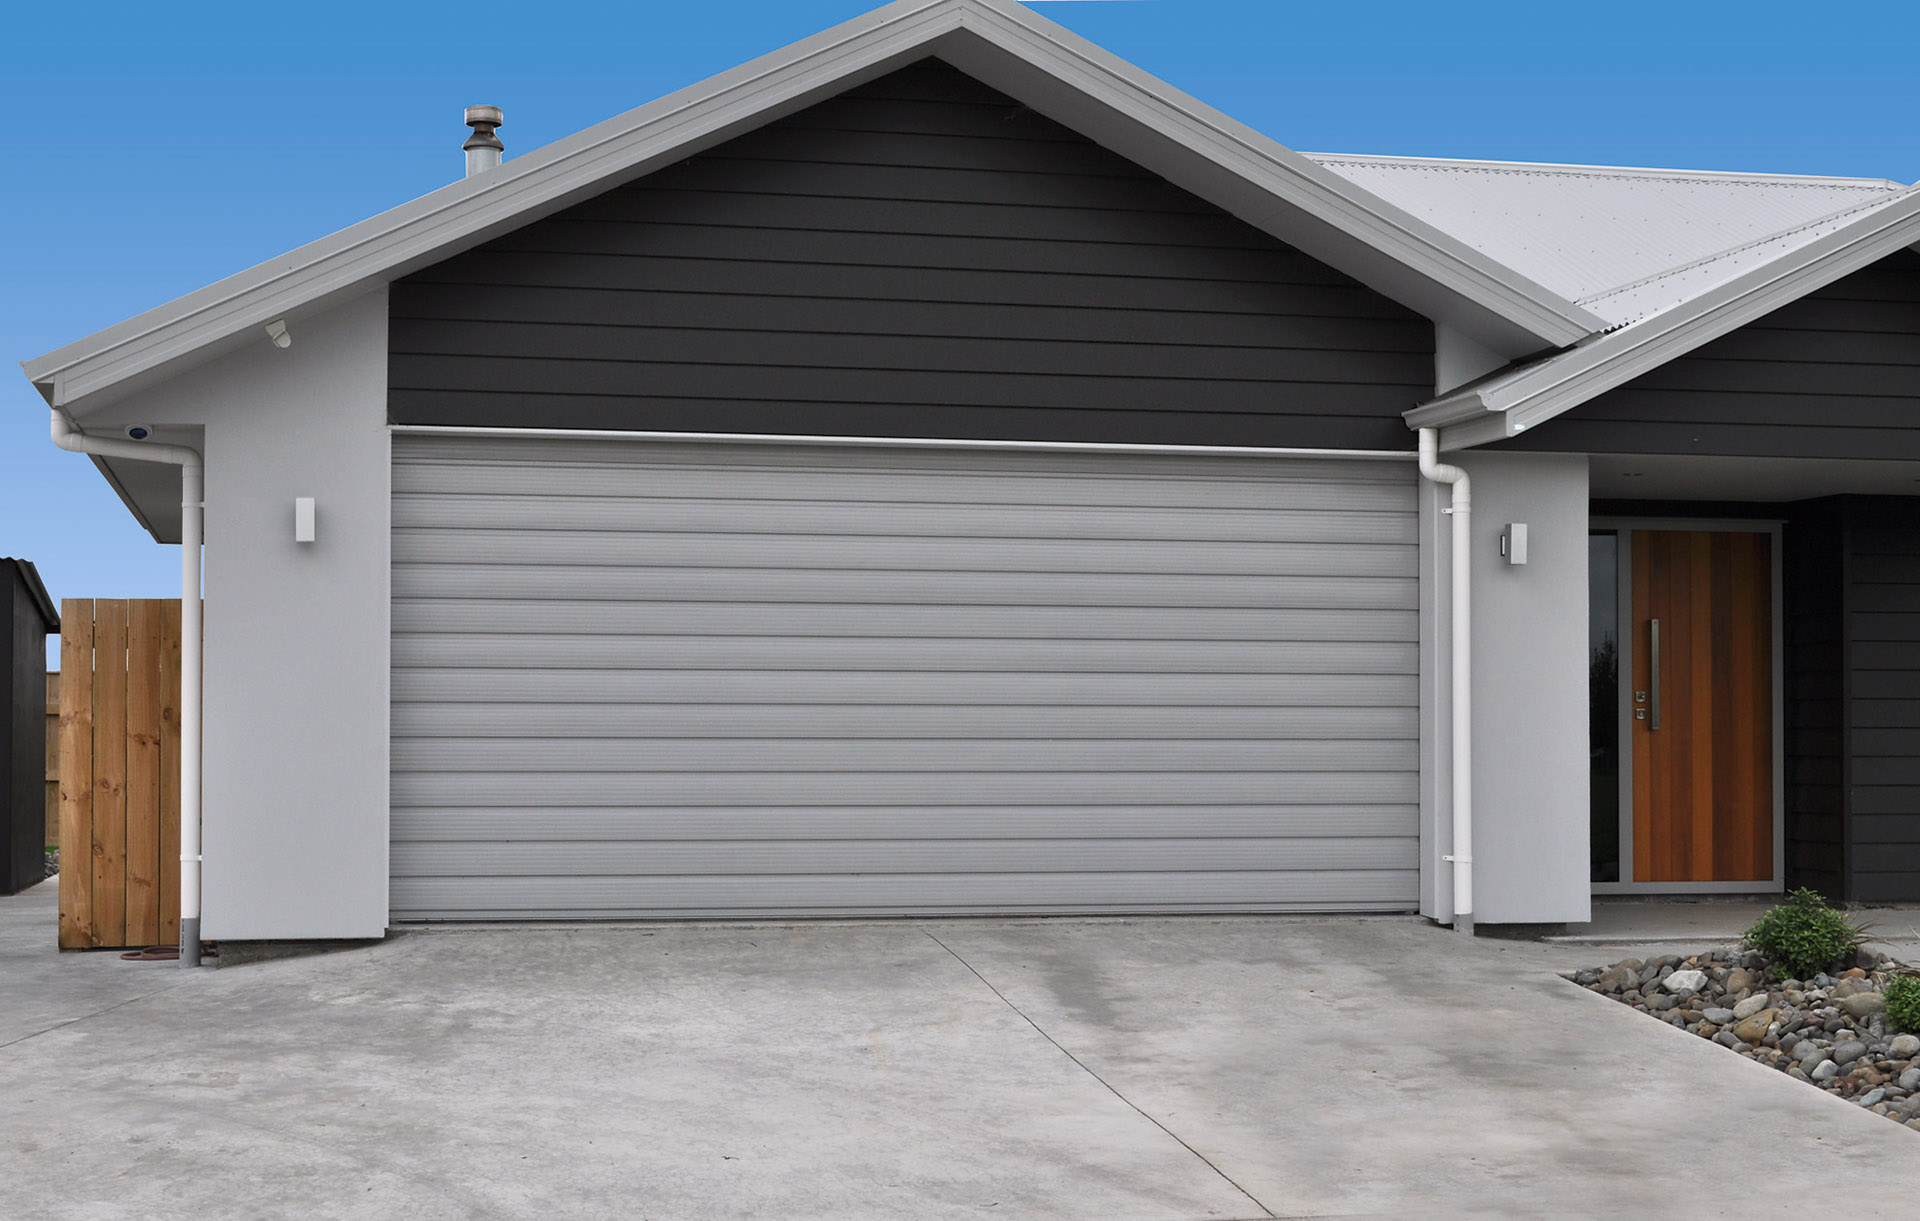 47 Easy Garage door insulation hamilton nz for Furniture Decorating Ideas